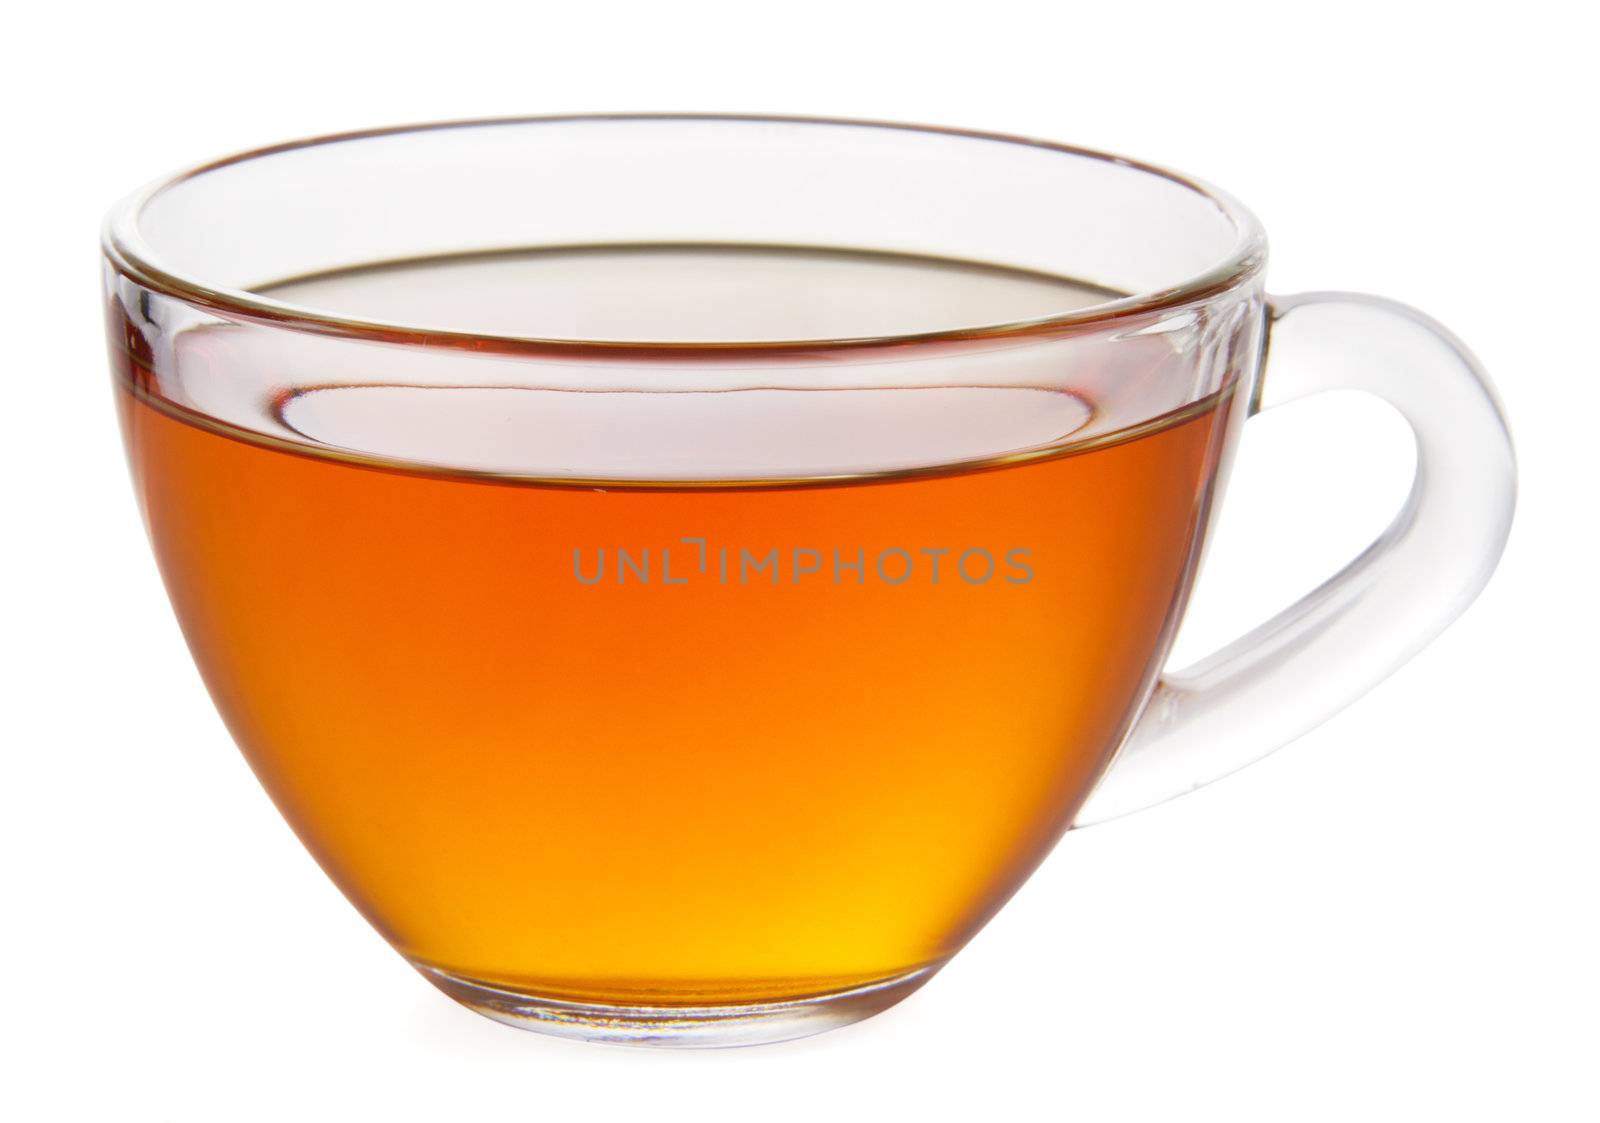 Cup of tea by Gdolgikh